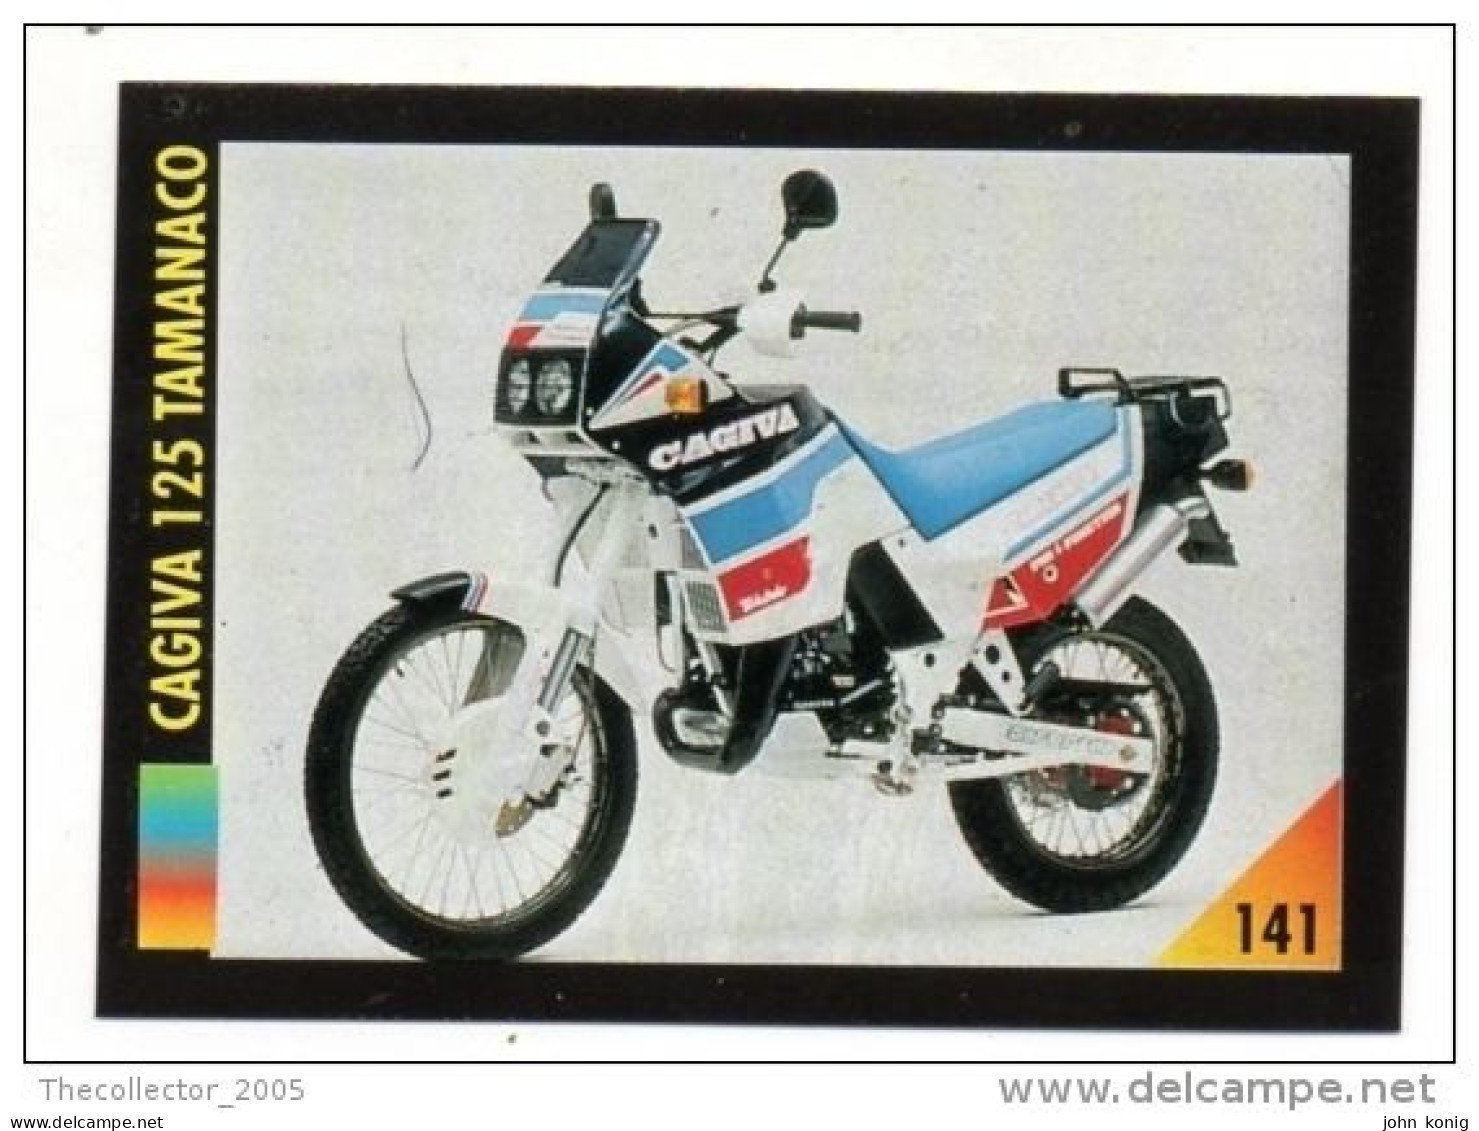 FIGURINA TRADING CARDS - LA MIA MOTO - MY MOTORBIKE - MASTERS EDIZIONI (1993) - CAGIVA 125 TAMANACO - Engine